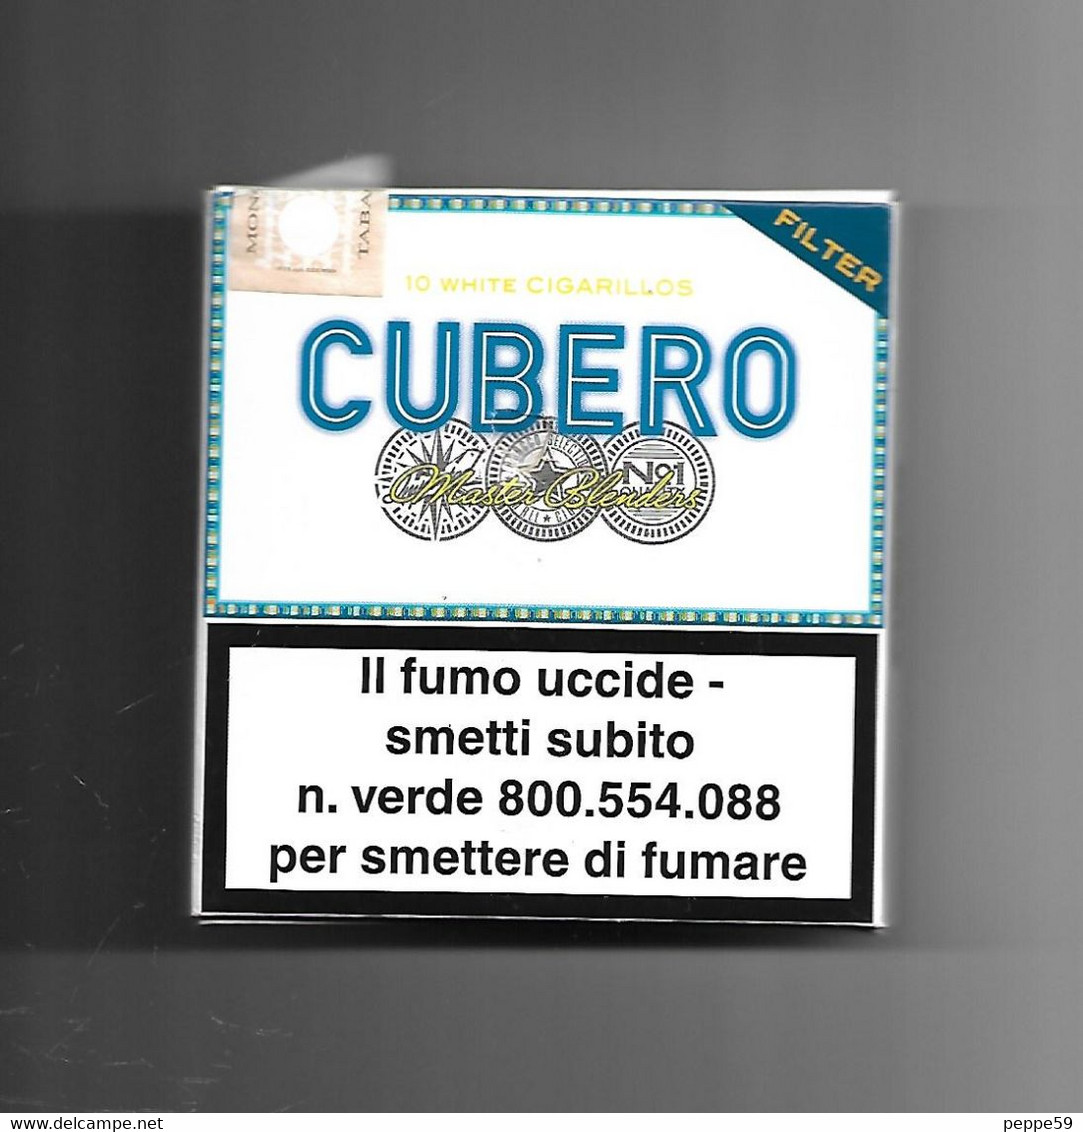 Tabacco Pacchetto Di Sigari Italia - 10 Cubero N.02  - (vuoto)  Tobacco-Tabac-Tabak-Tabaco - Zigarrenkisten (leer)